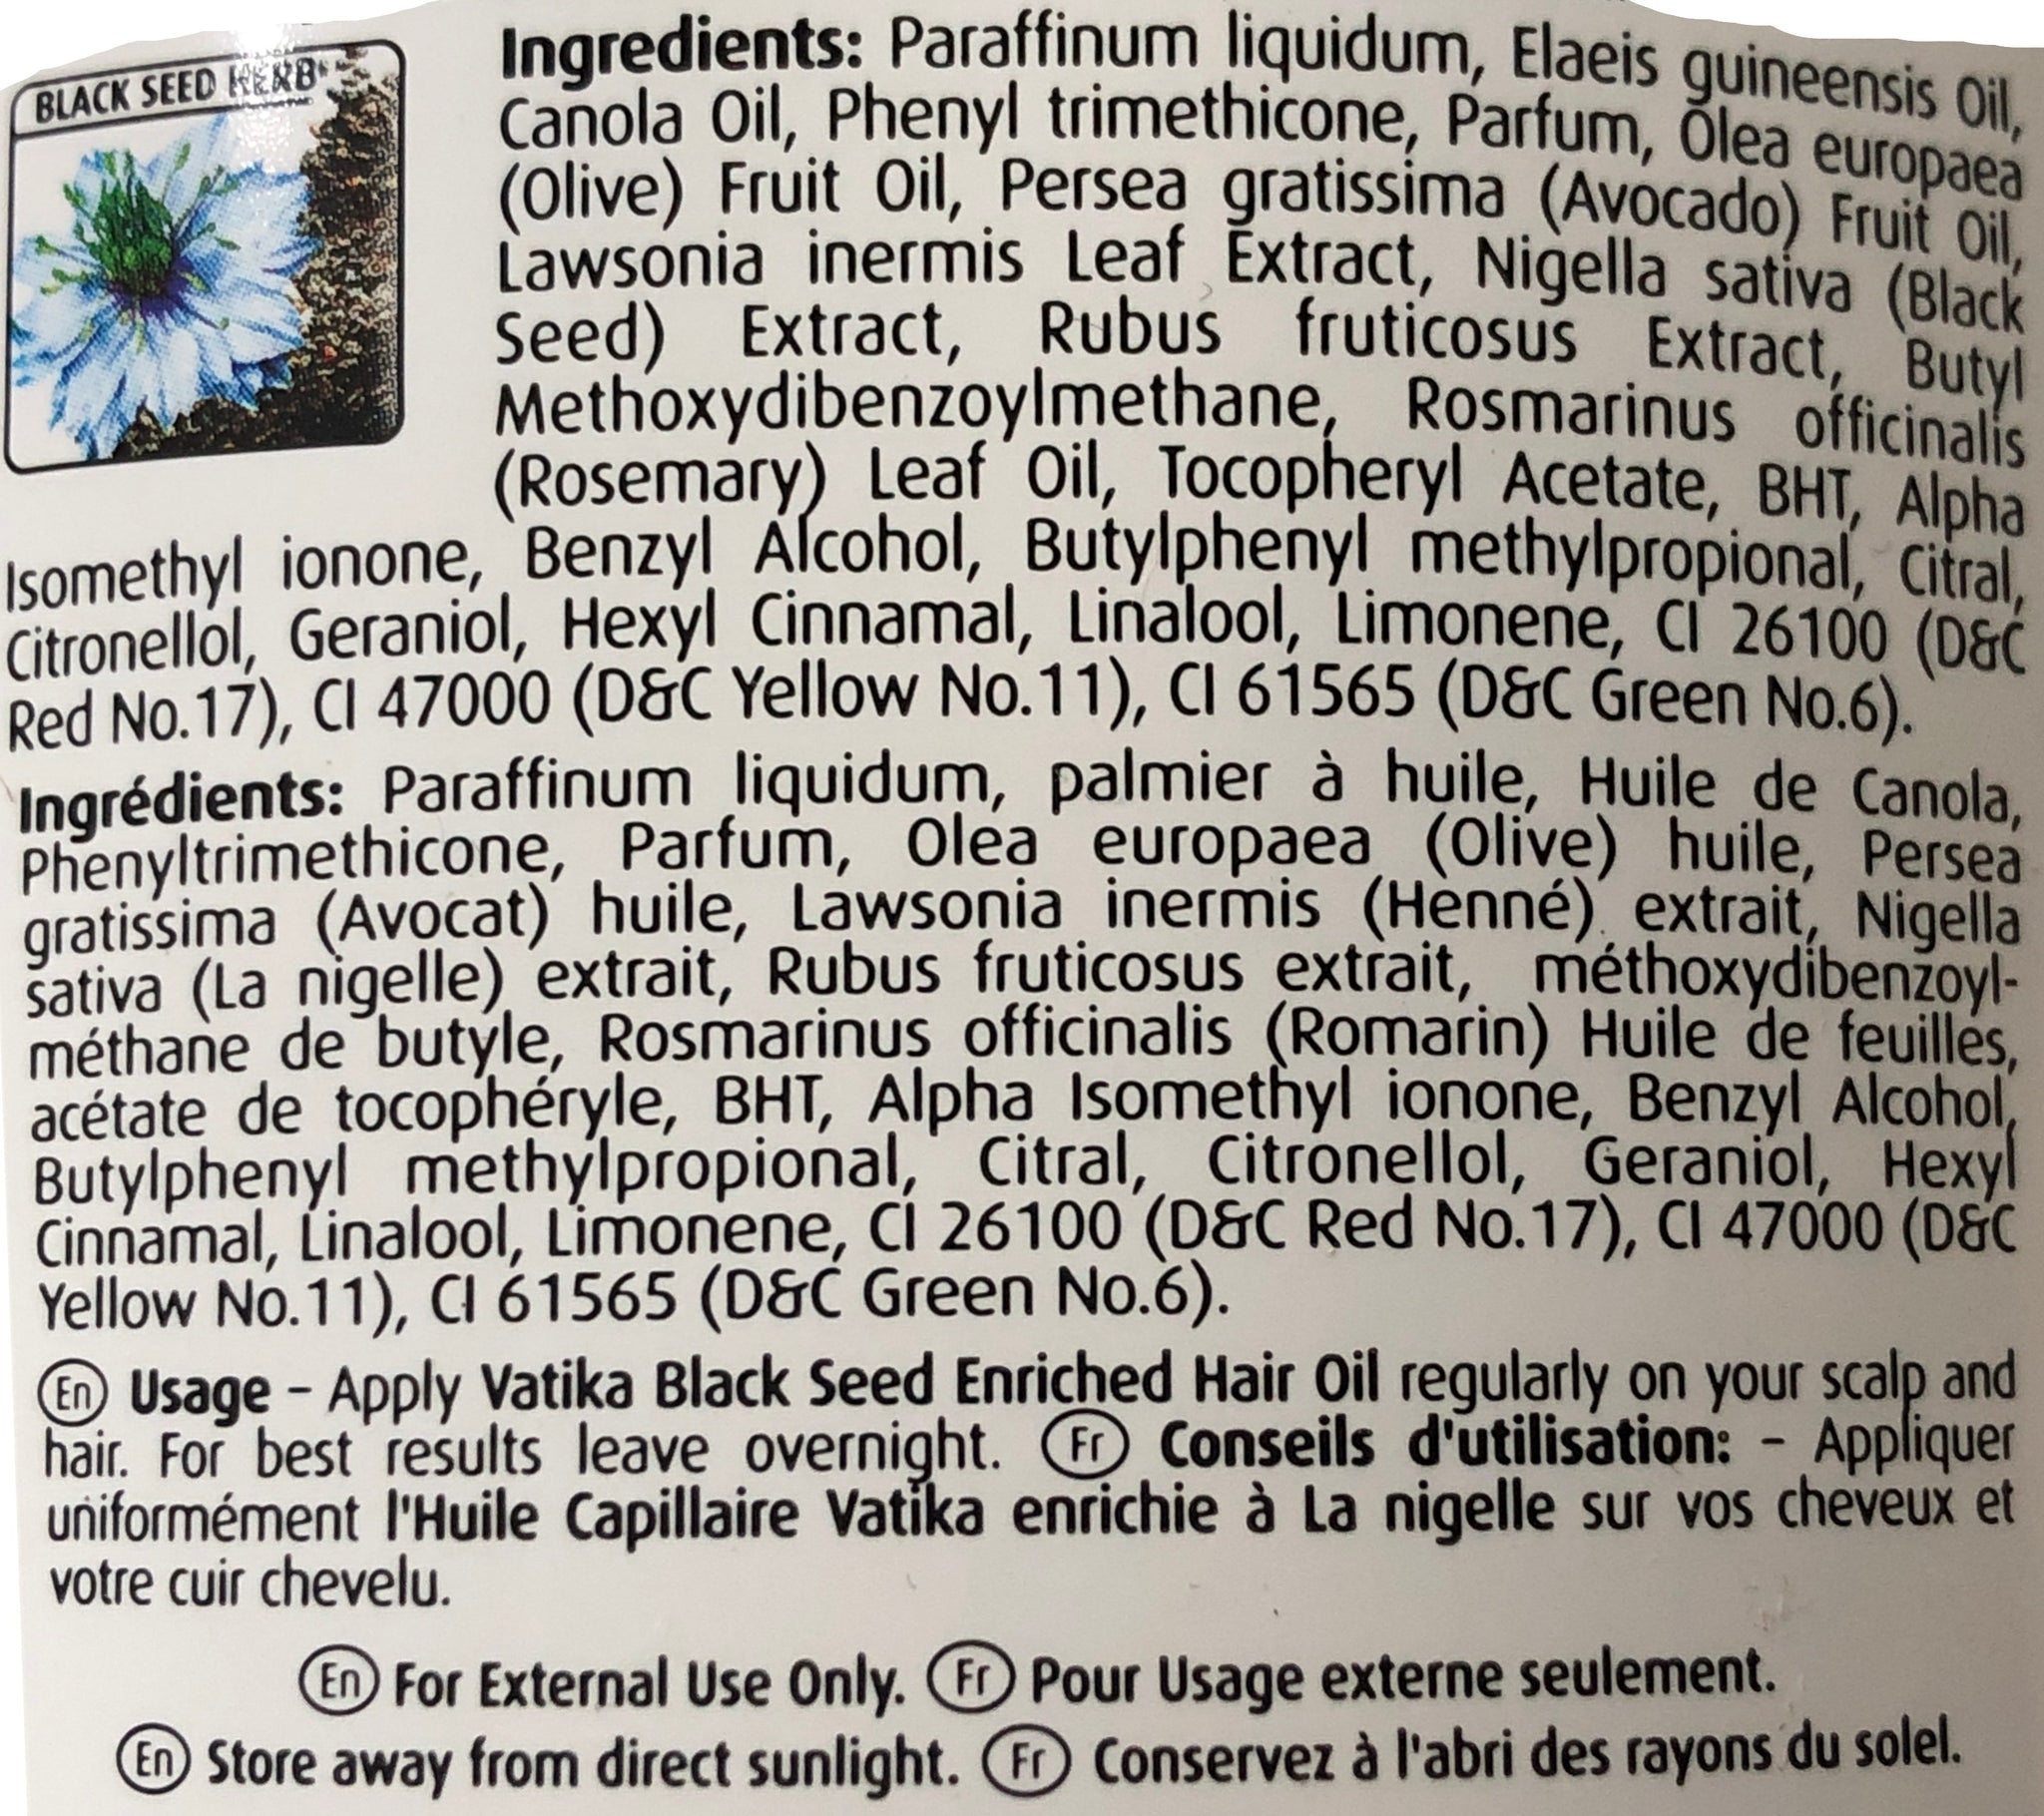 Black Seed Enriched Hair Oil